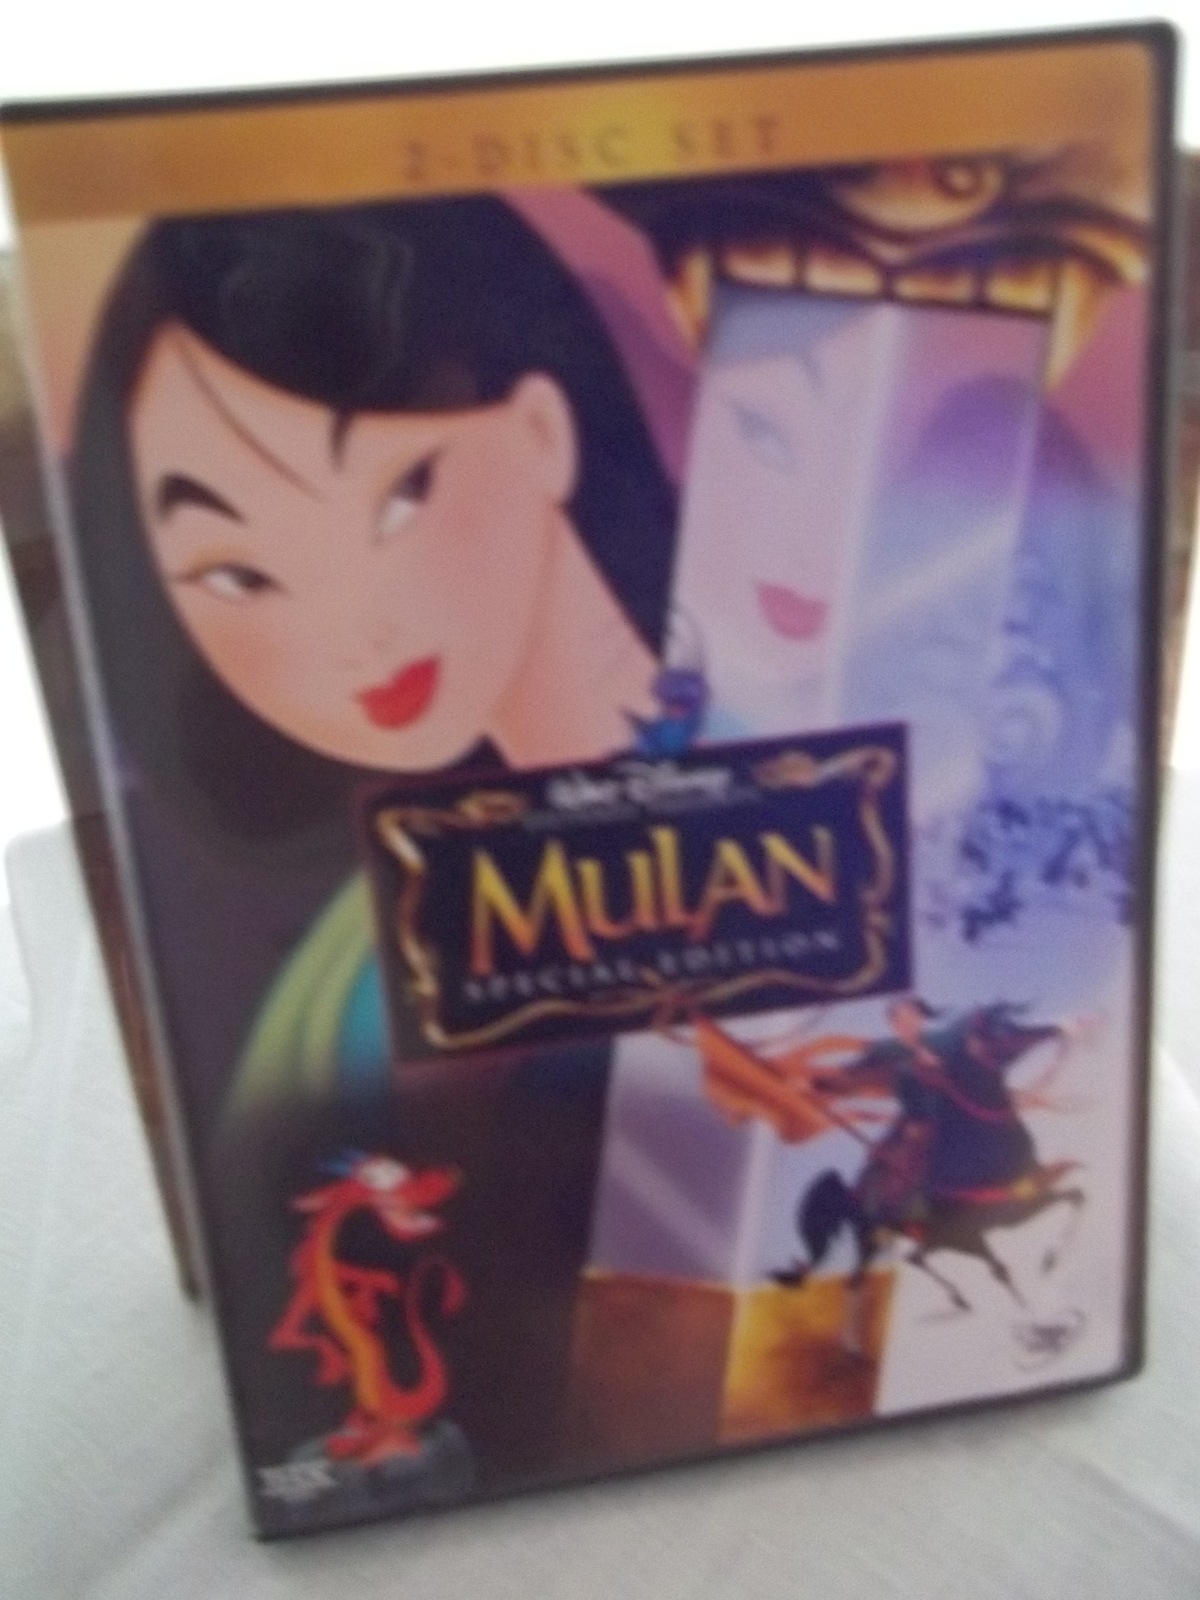 Mulan Dvd 04 Release 2 Disc Set And 50 Similar Items